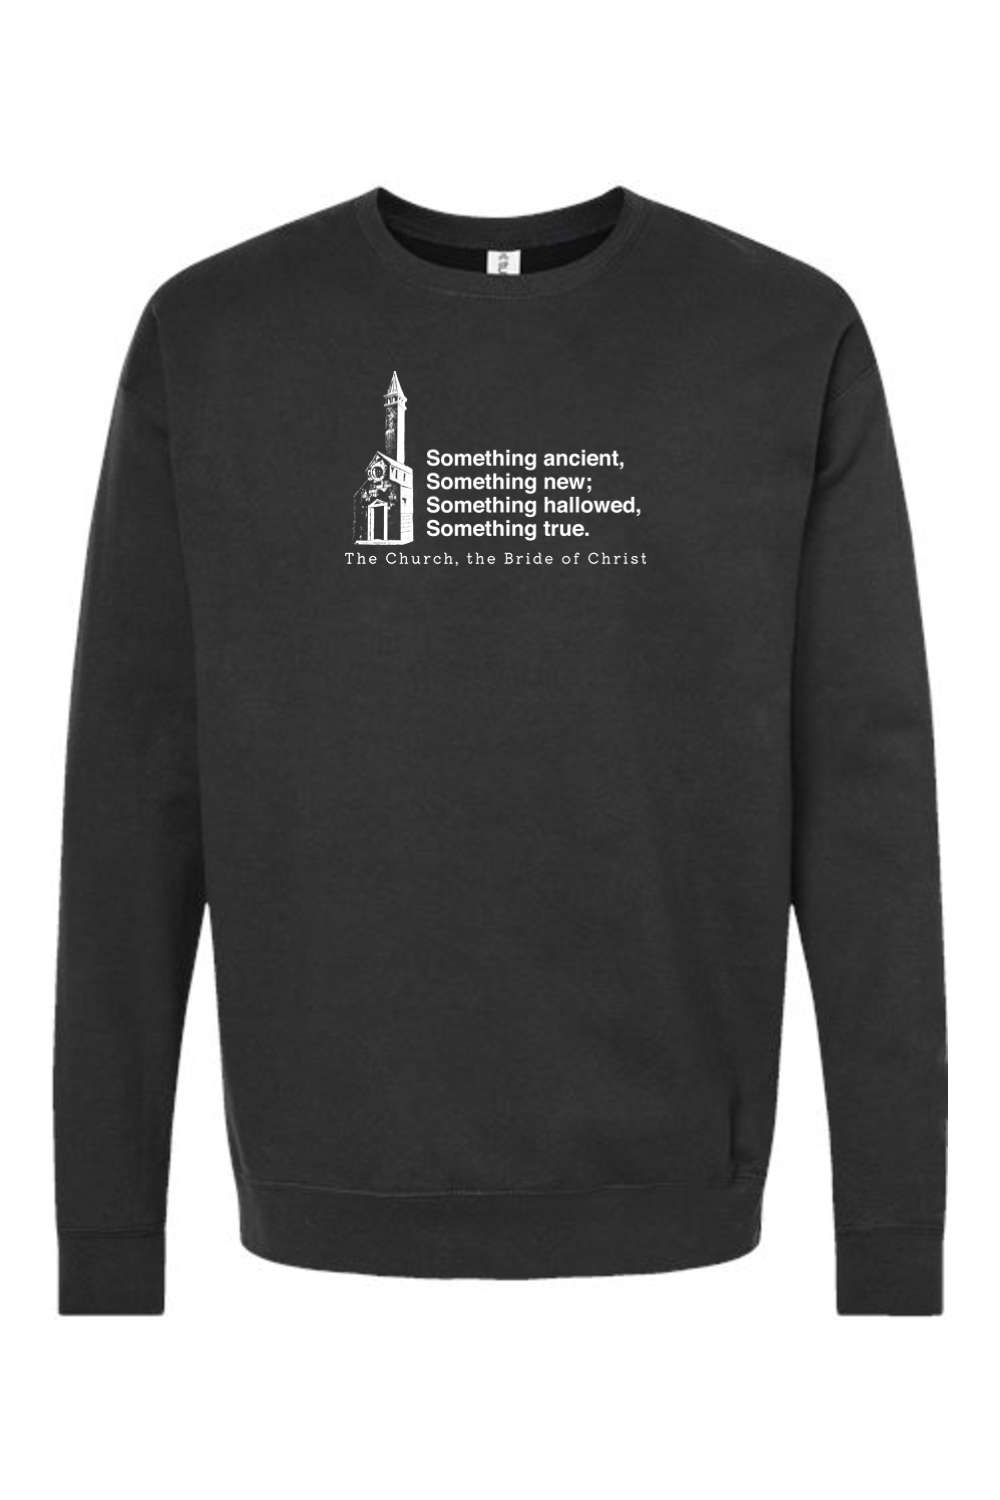 Never the Bridesmaid, Always the Bride - Catholic Church Crewneck Sweatshirt